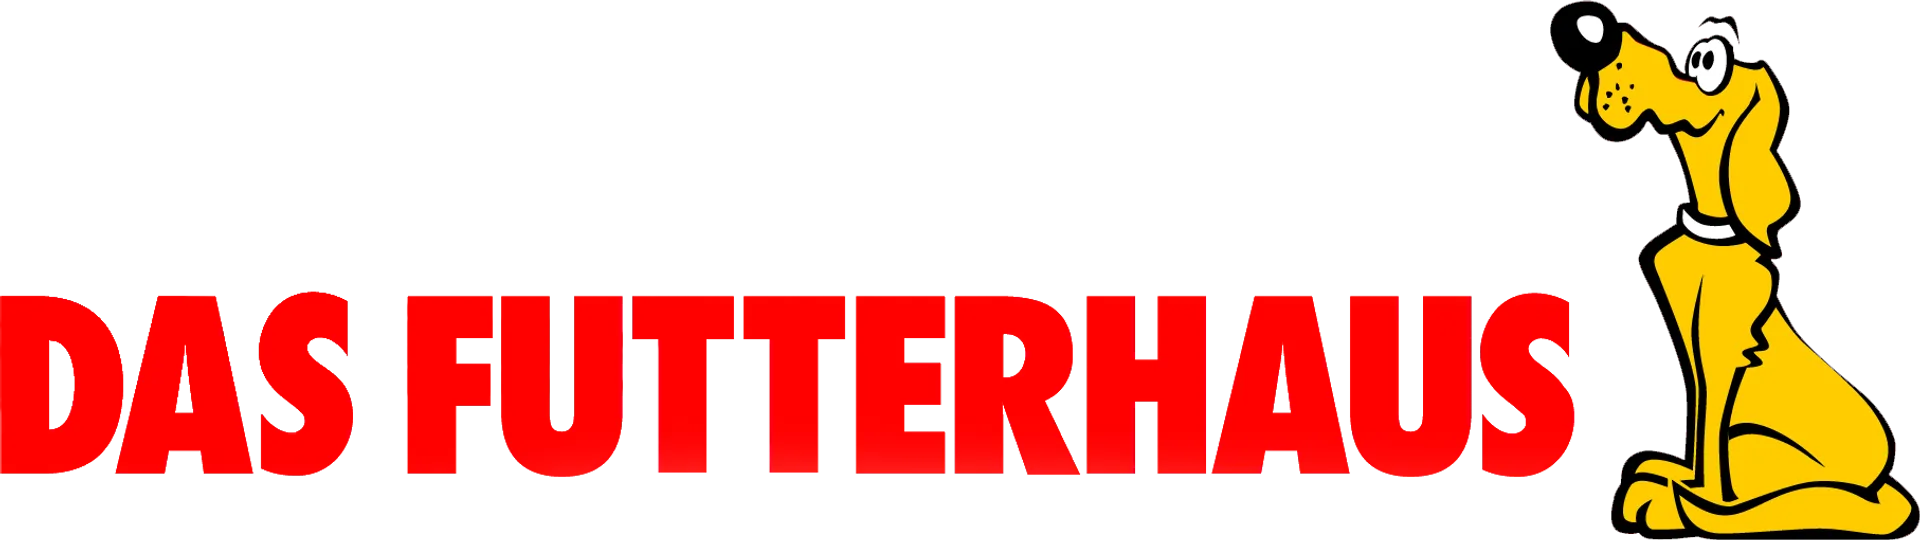 FUTTERHAUS logo die aktuell Prospekt